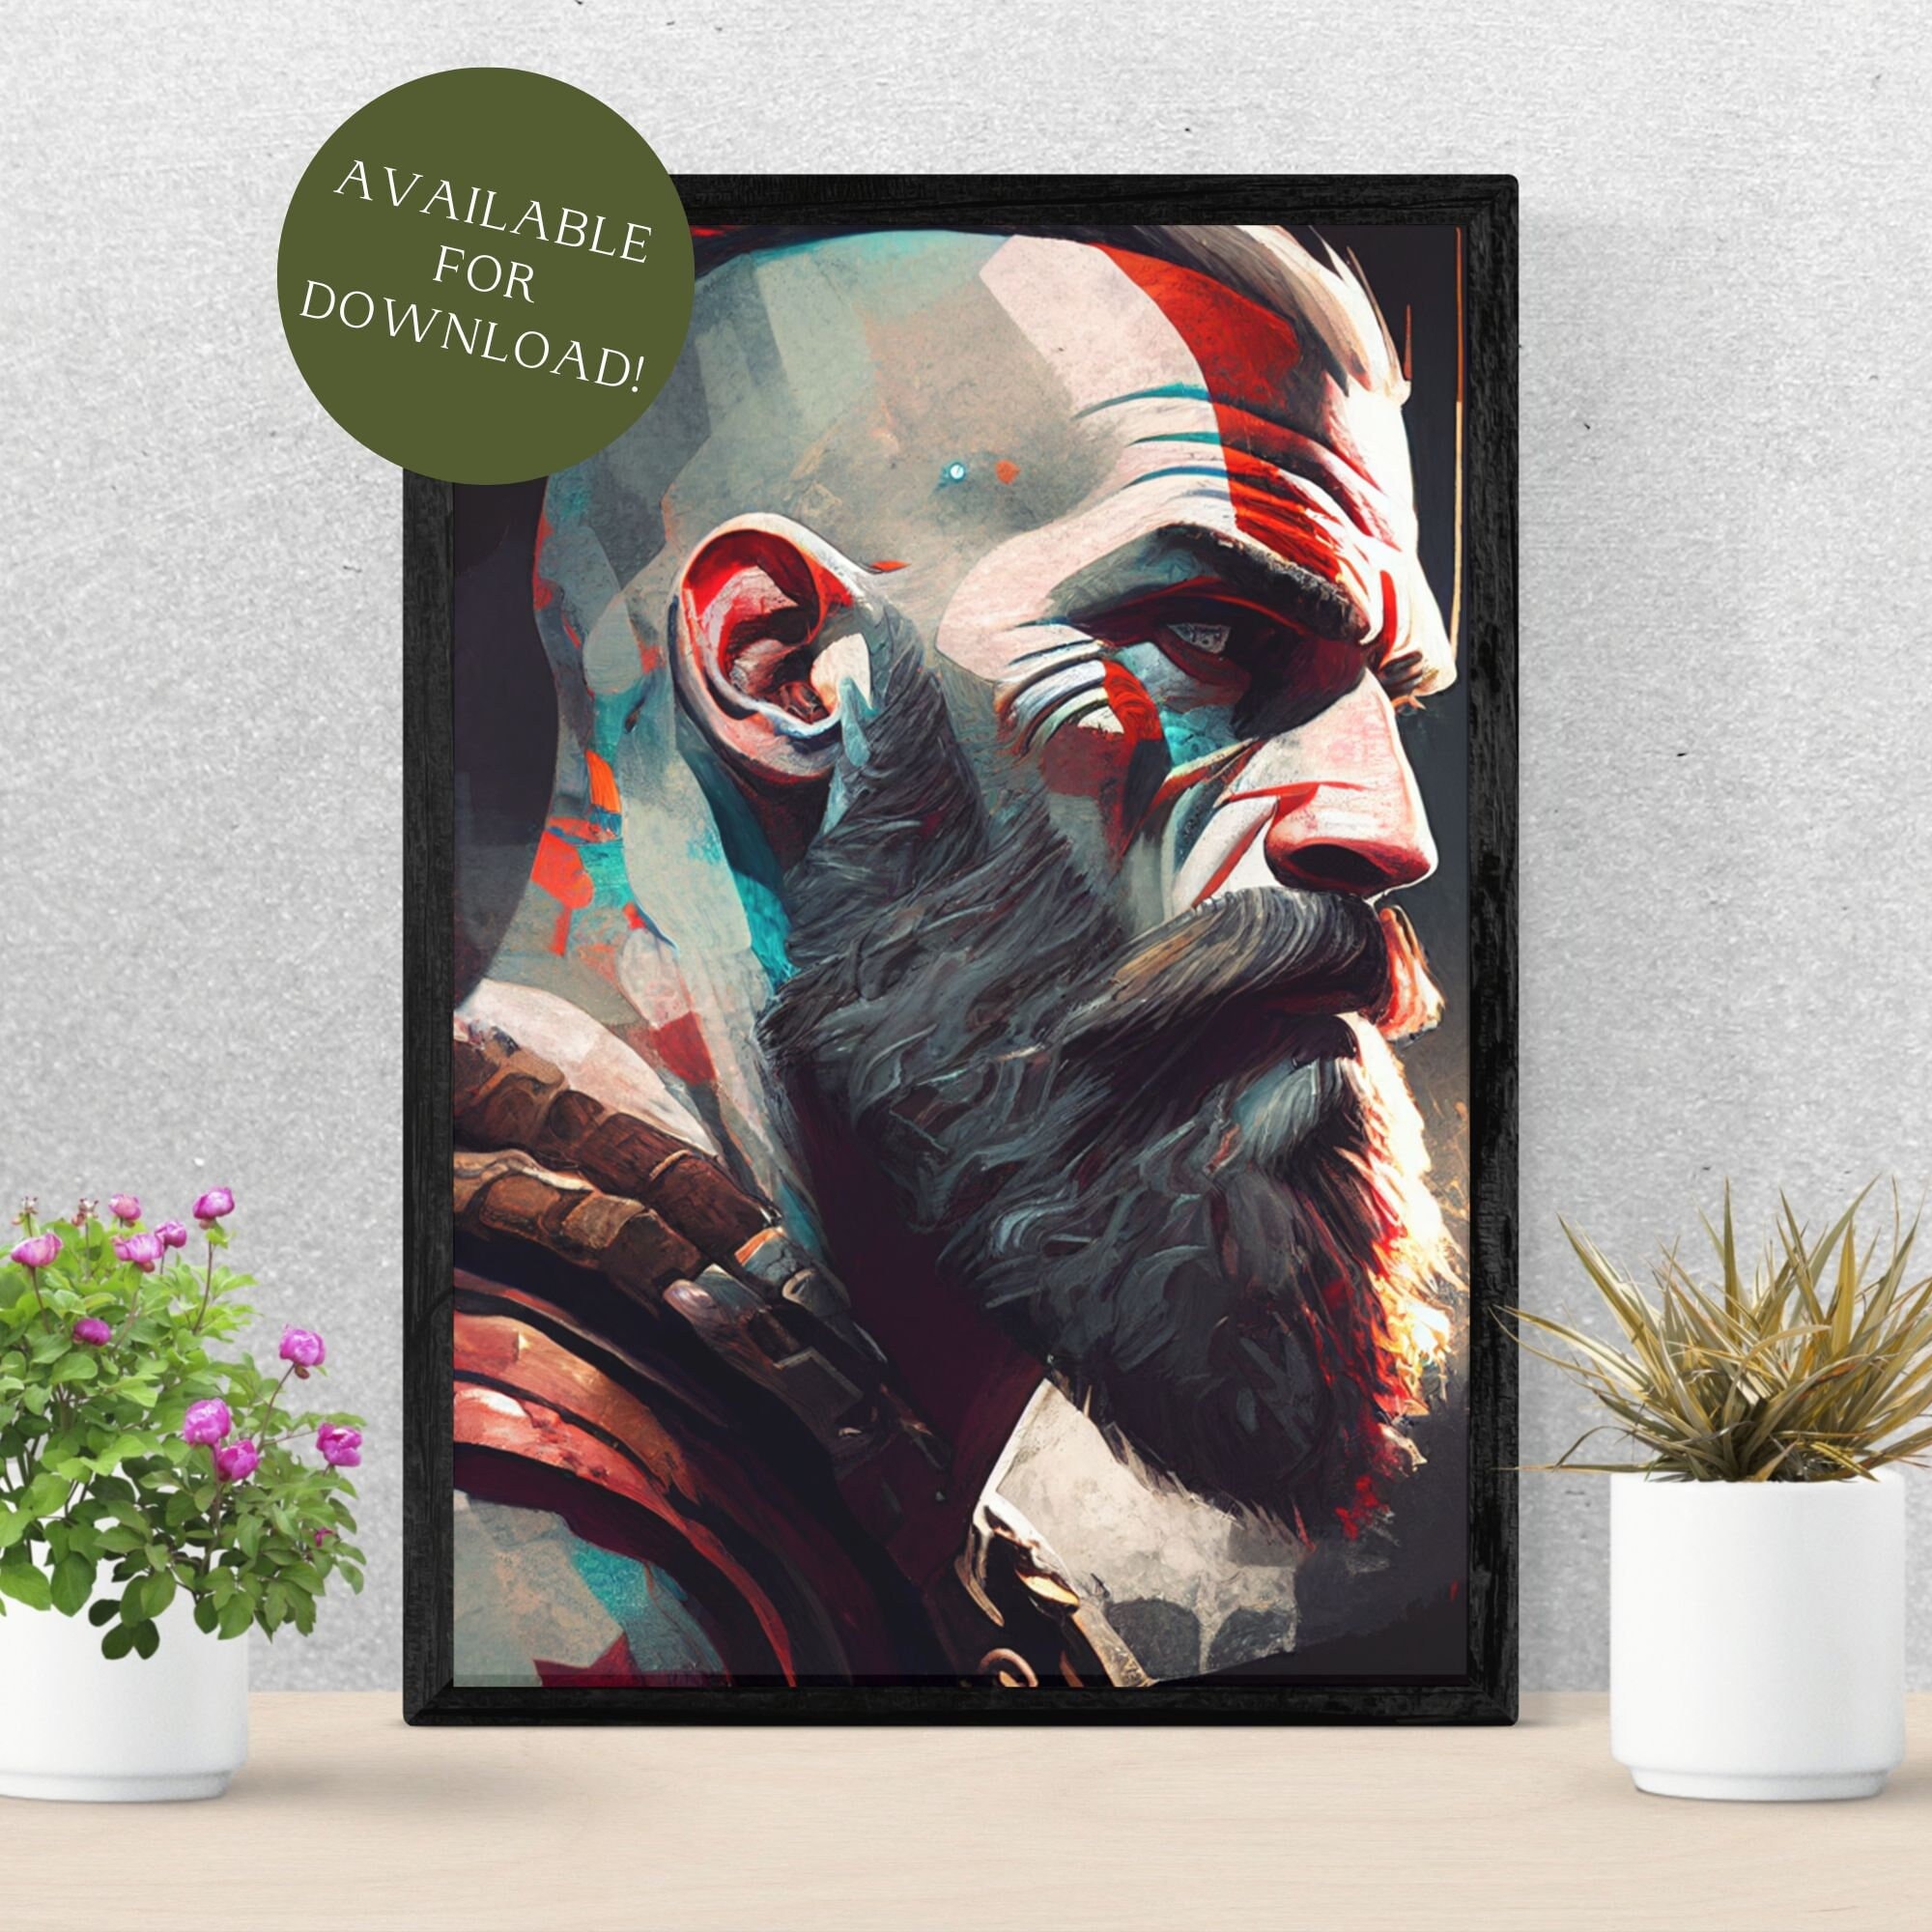 God Of War 4 Kratos In Dark Design Game Art Wall - POSTER 20x30